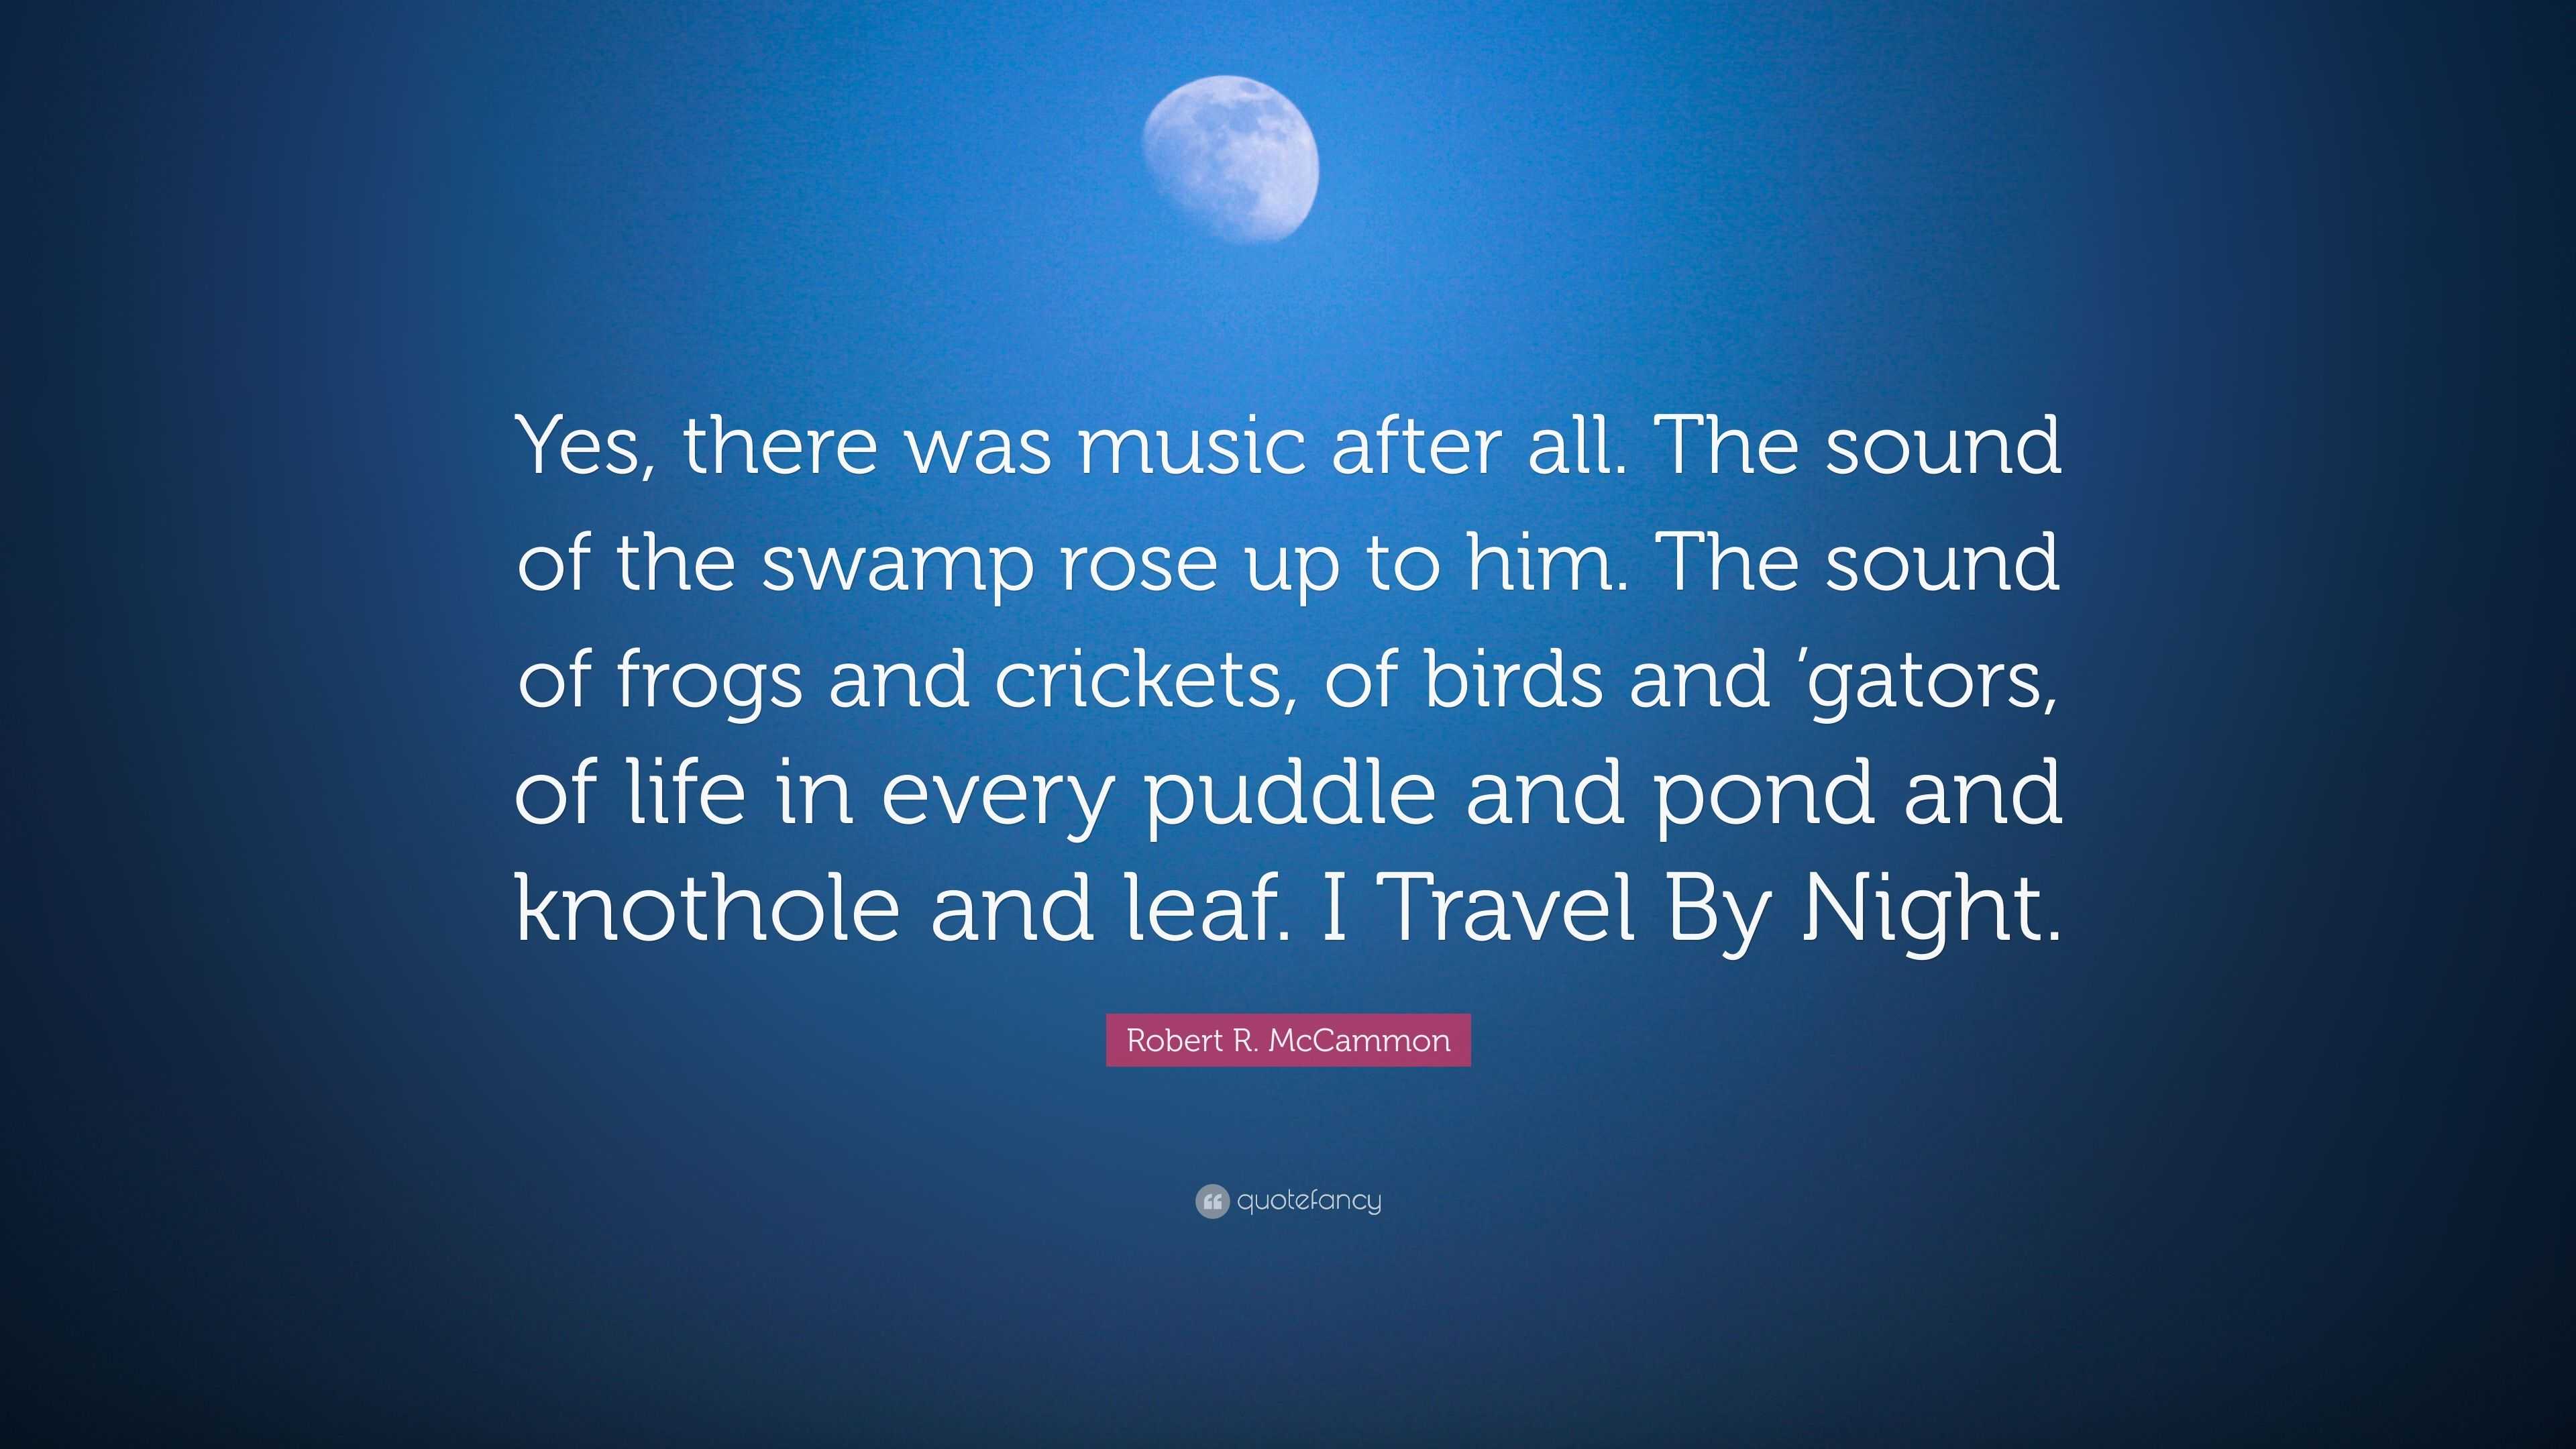 I Travel by Night by Robert McCammon